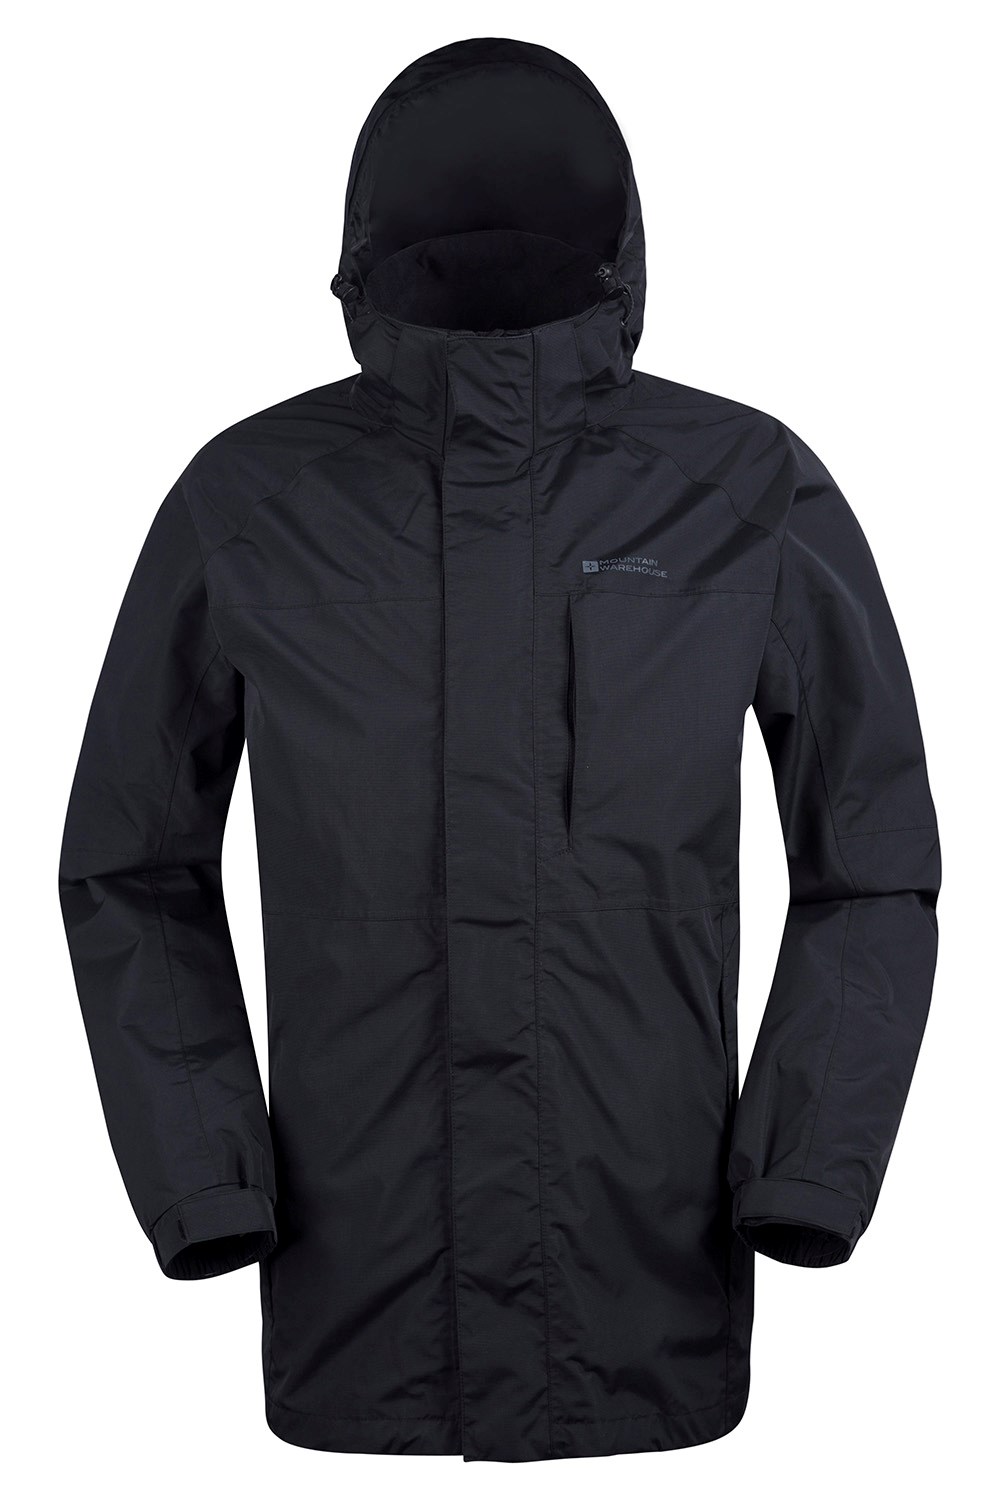 Mountain Warehouse Ridge Mens Long Waterproof Jacket | eBay